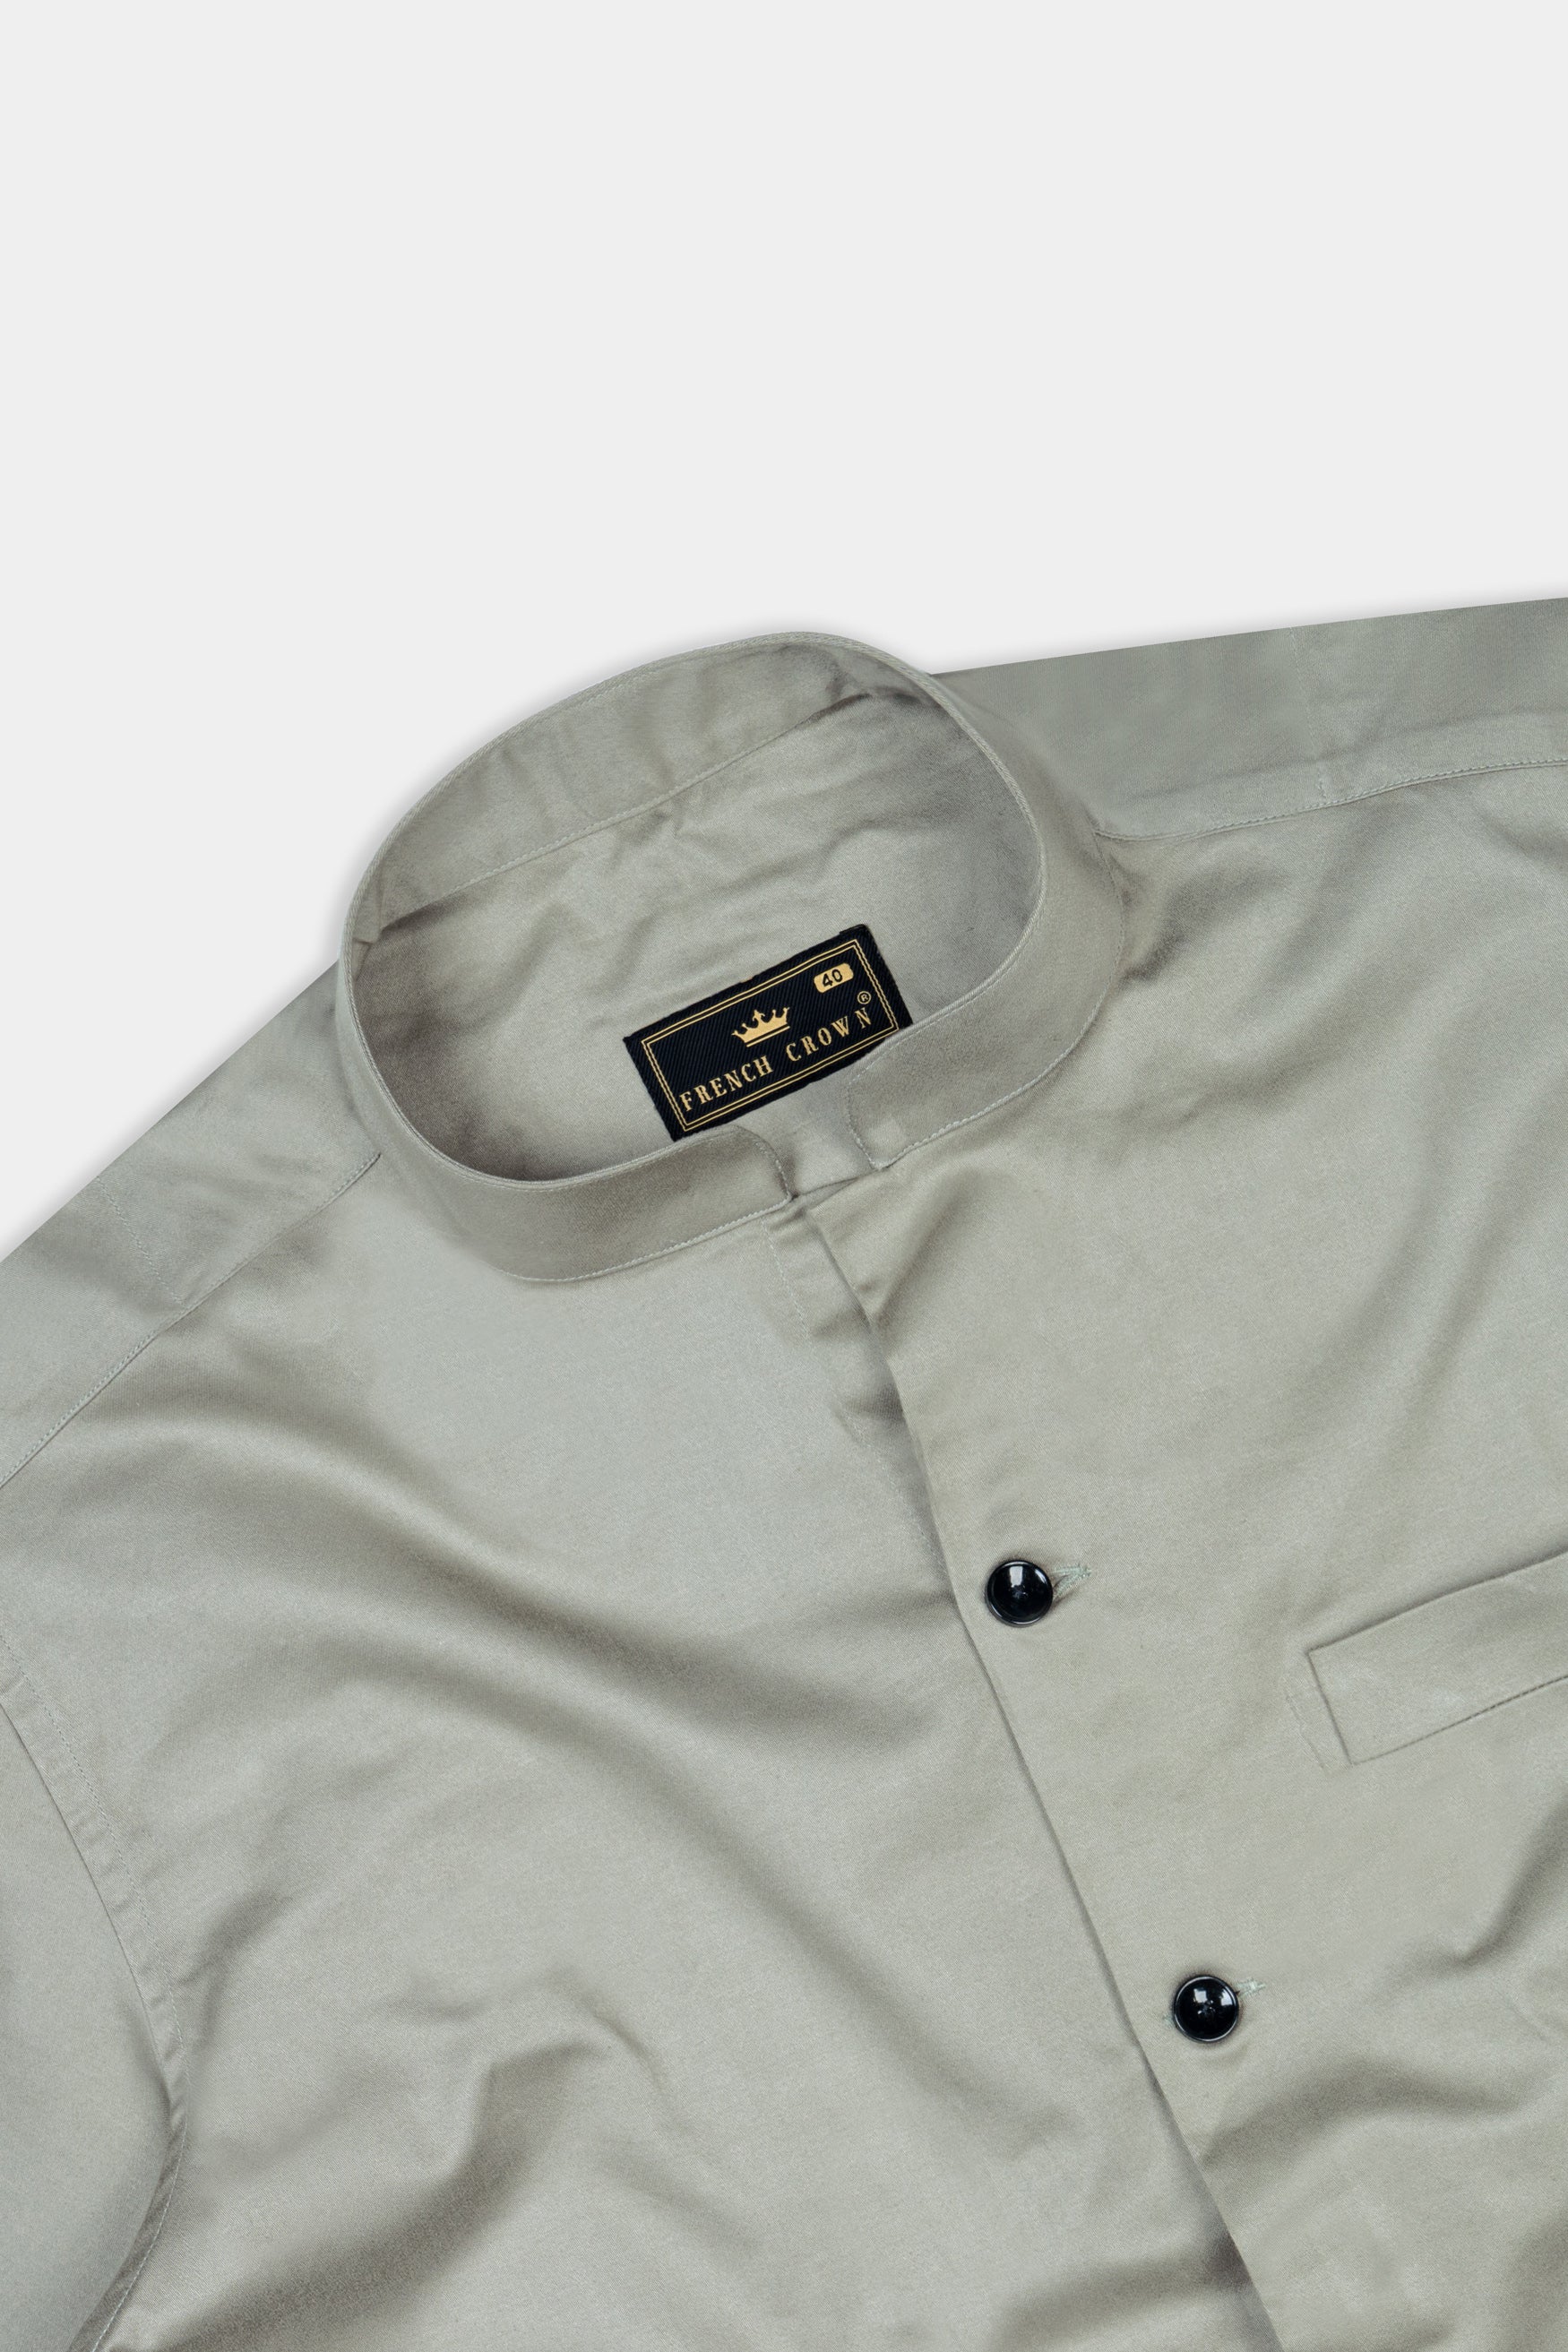 Chalice Gray Premium Cotton Designer Jacket